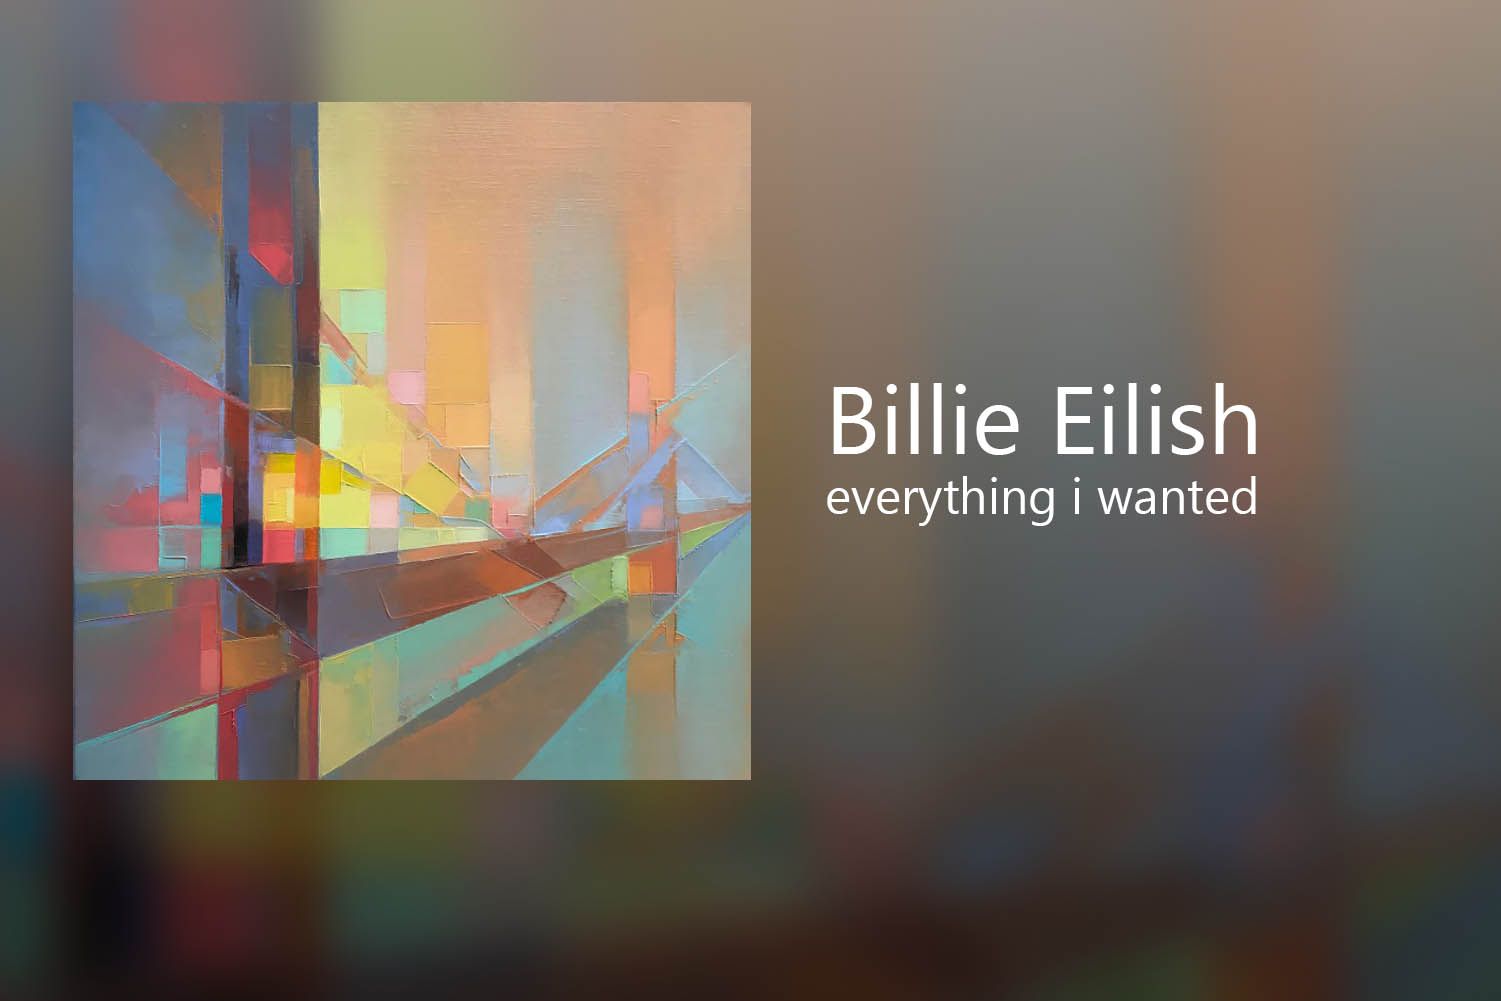 I wanna leave you. Билли Айлиш everything i wanted. Everything i wanted обложка. Billie Eilish everything i wanted обложка. Billie Eilish Remix everything i wanted.